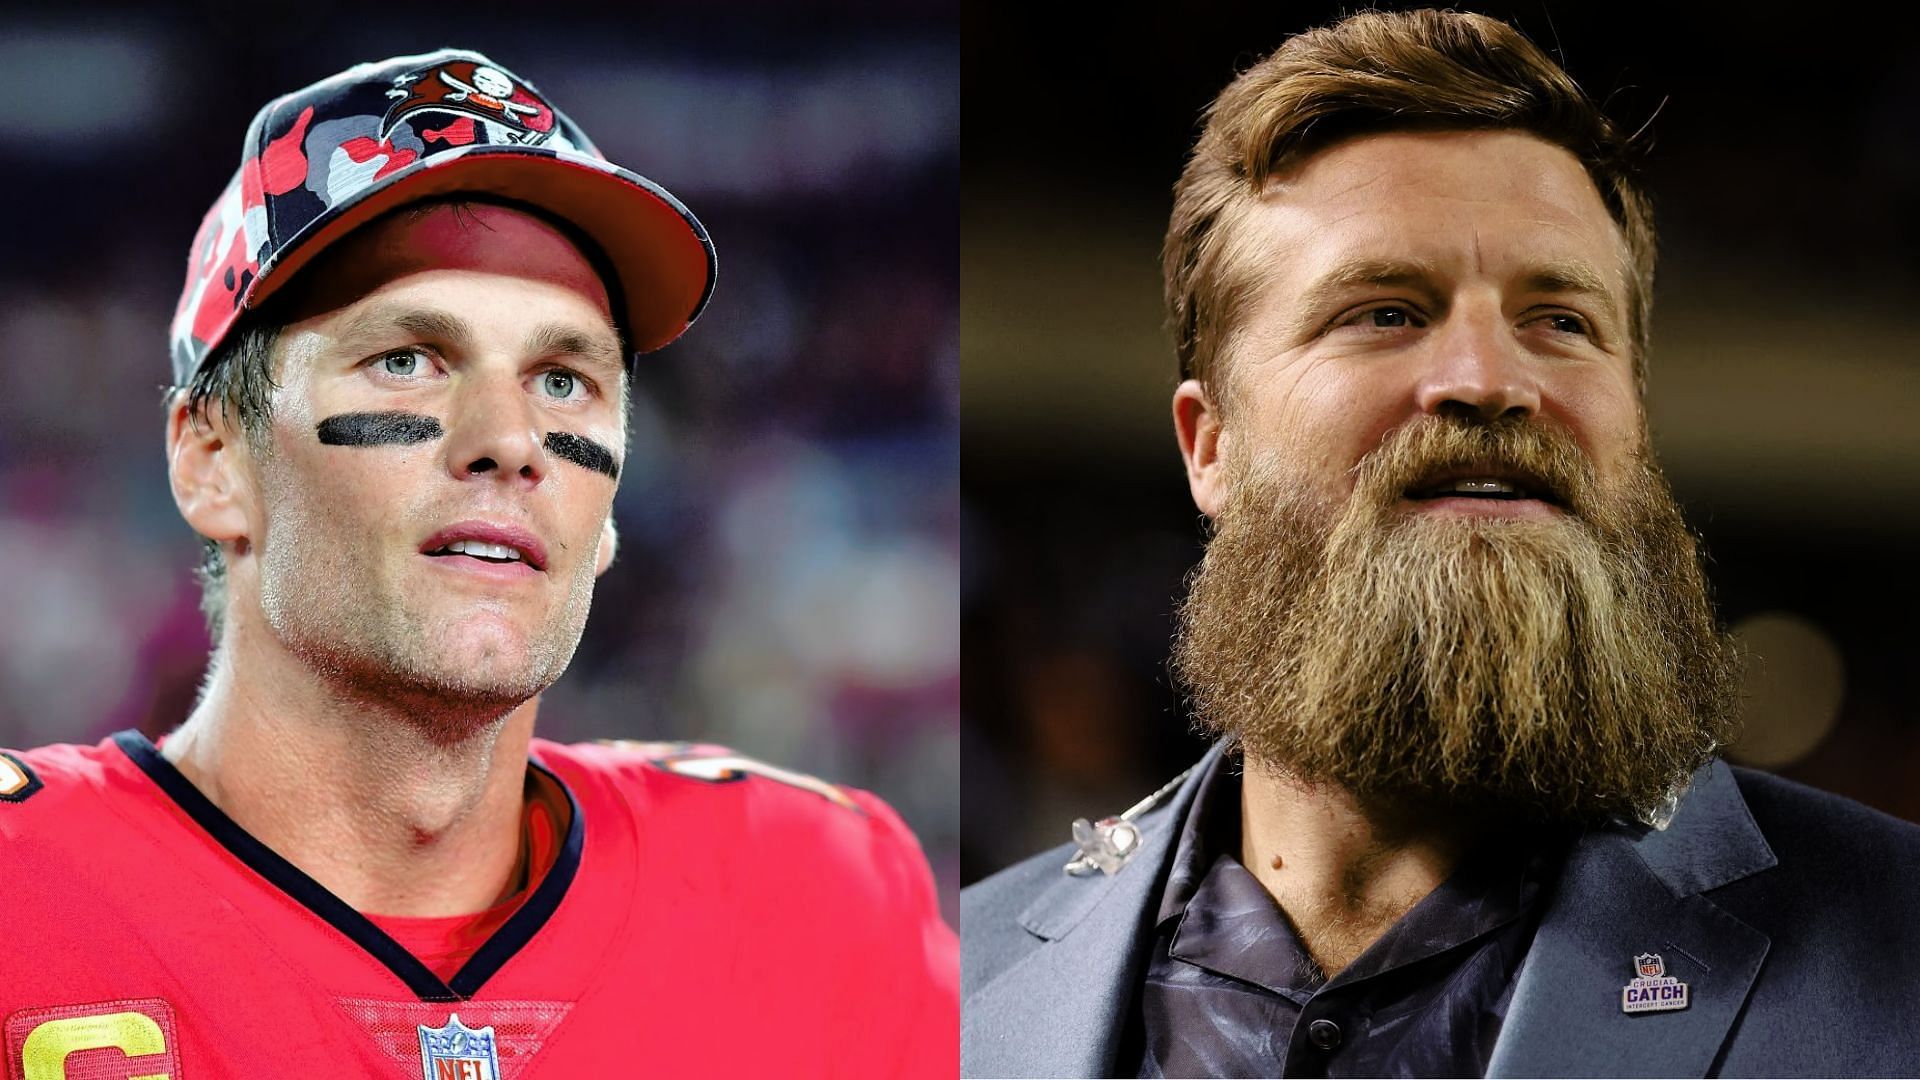 Tom Brady vs Ryan Fitzpatrick beef: Retracing infamous feud between ex-NFL QBs